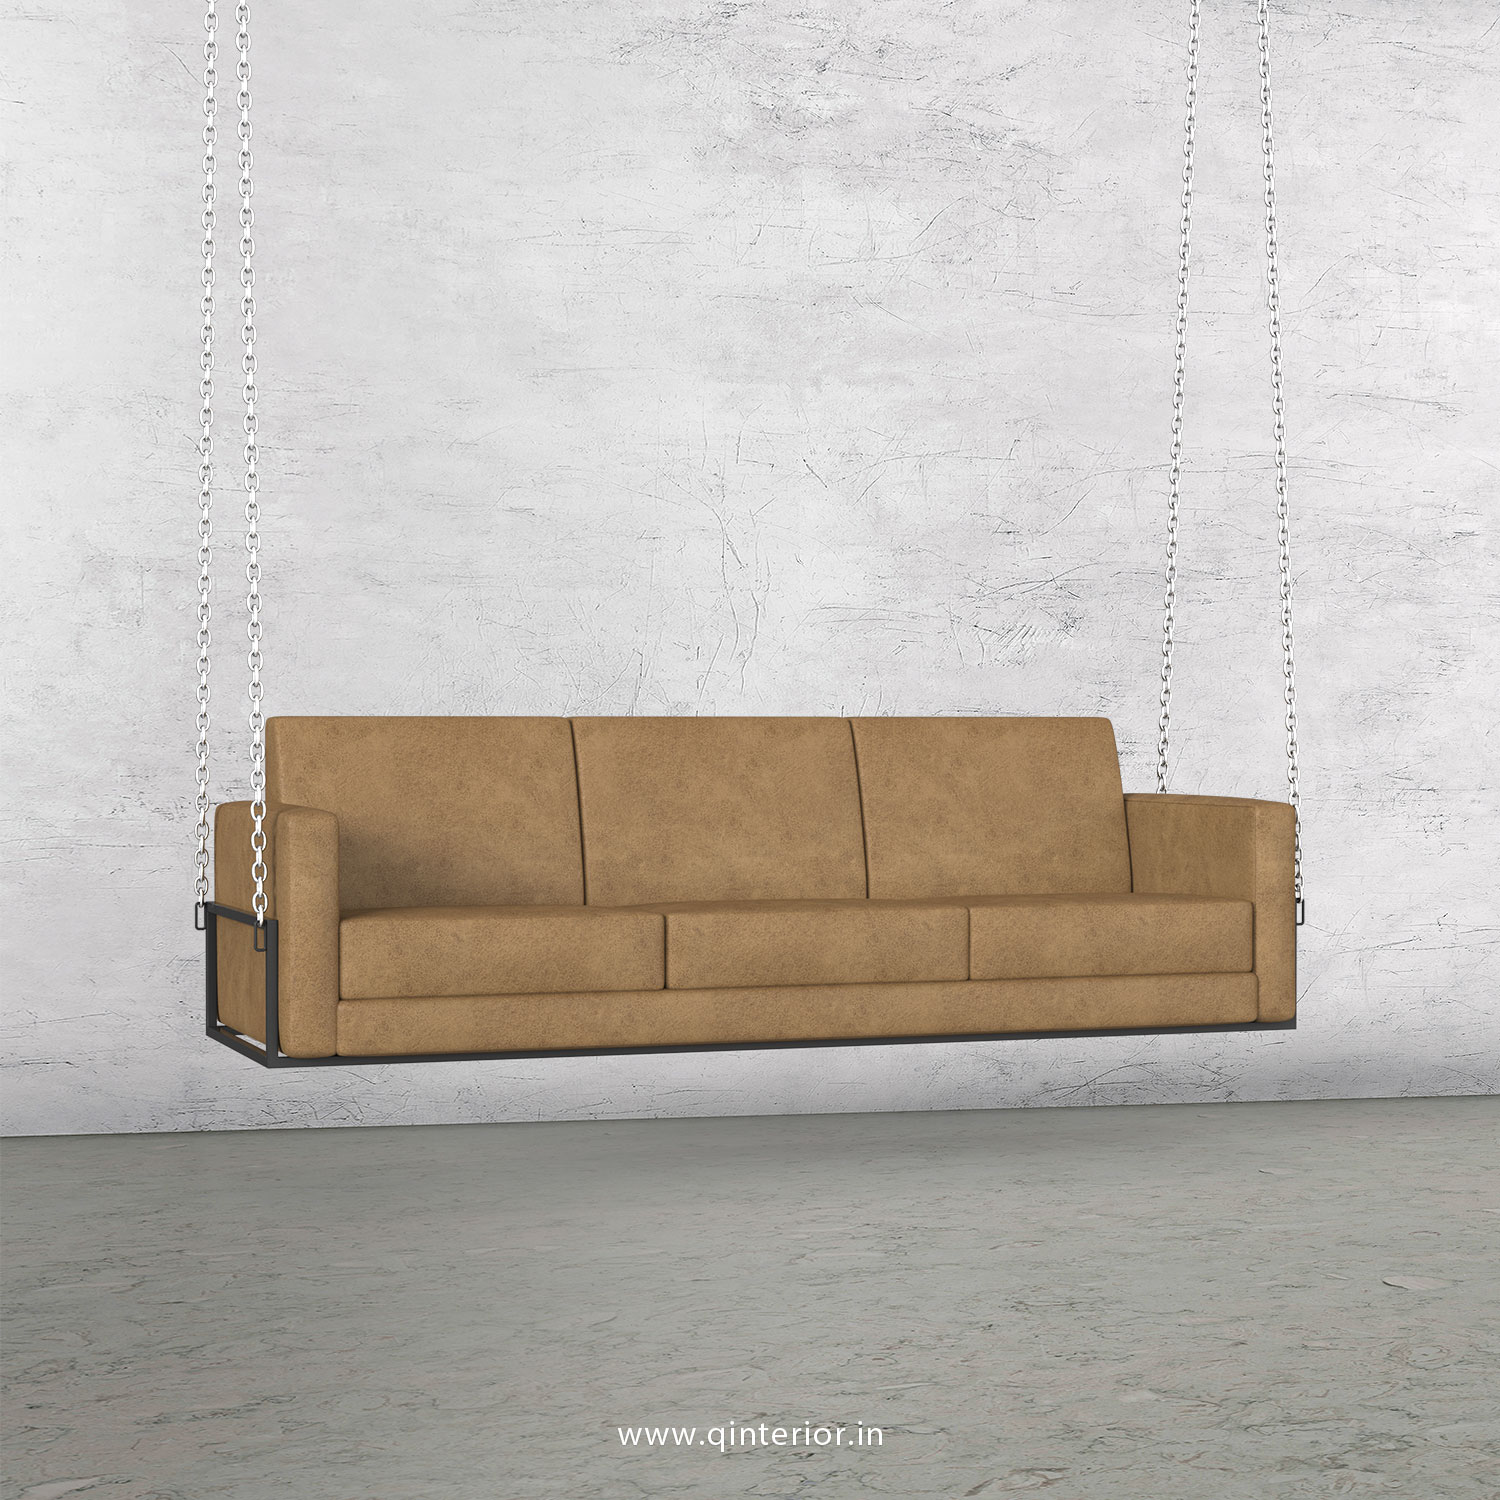 NIRVANA 3 Seater Swing Sofa in Fab Leather Fabric - SSF001 FL02